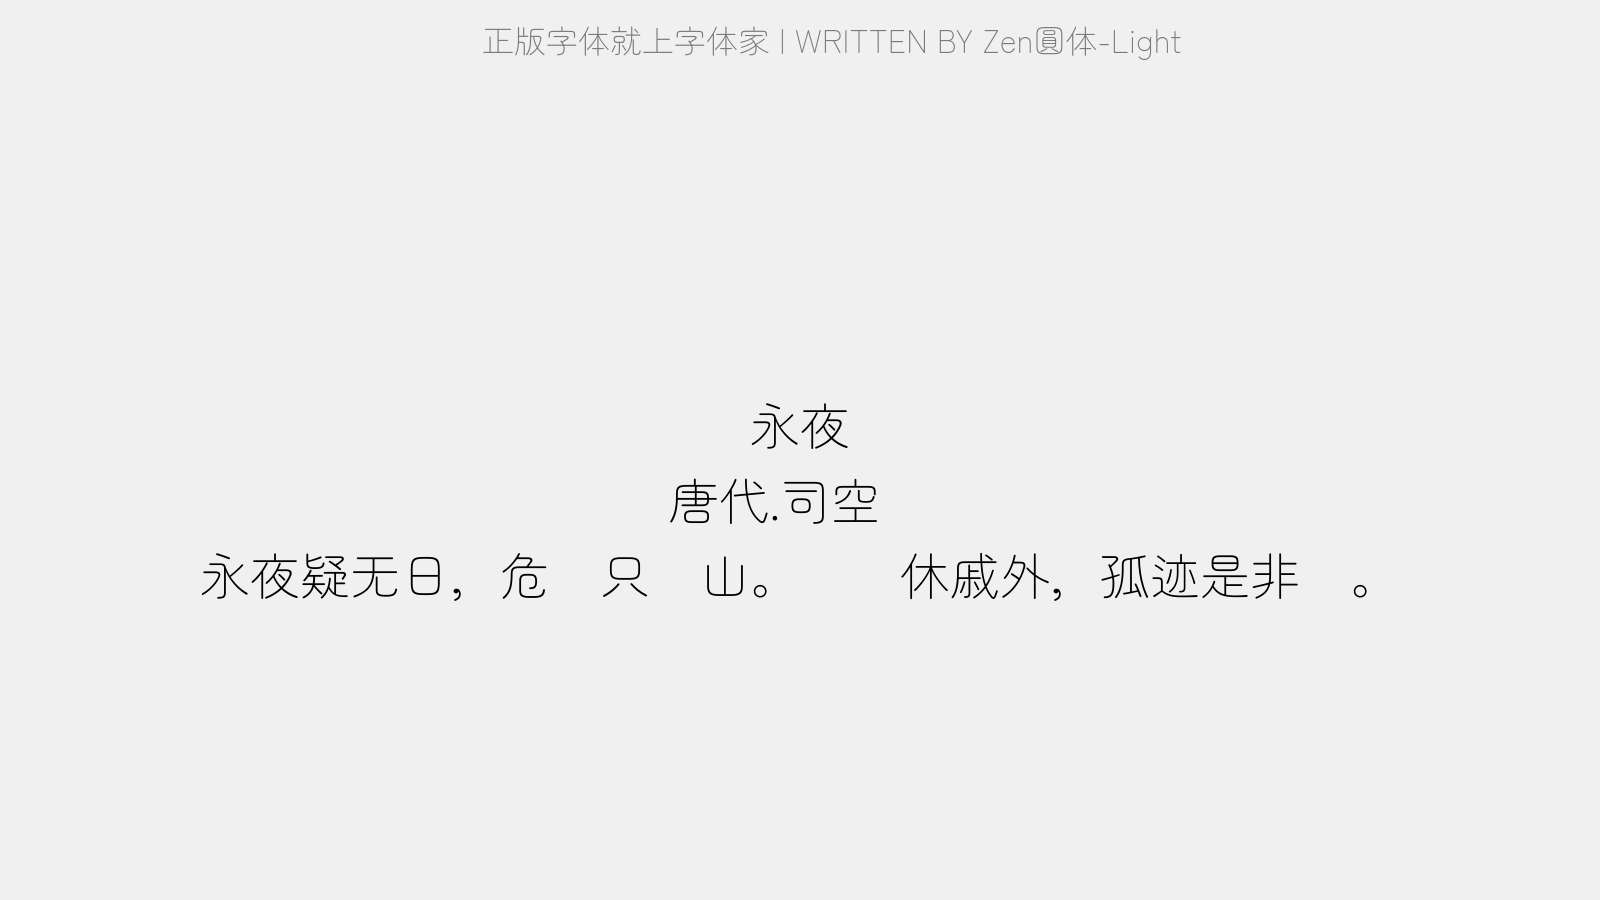 Zen圆体-Light - 永夜